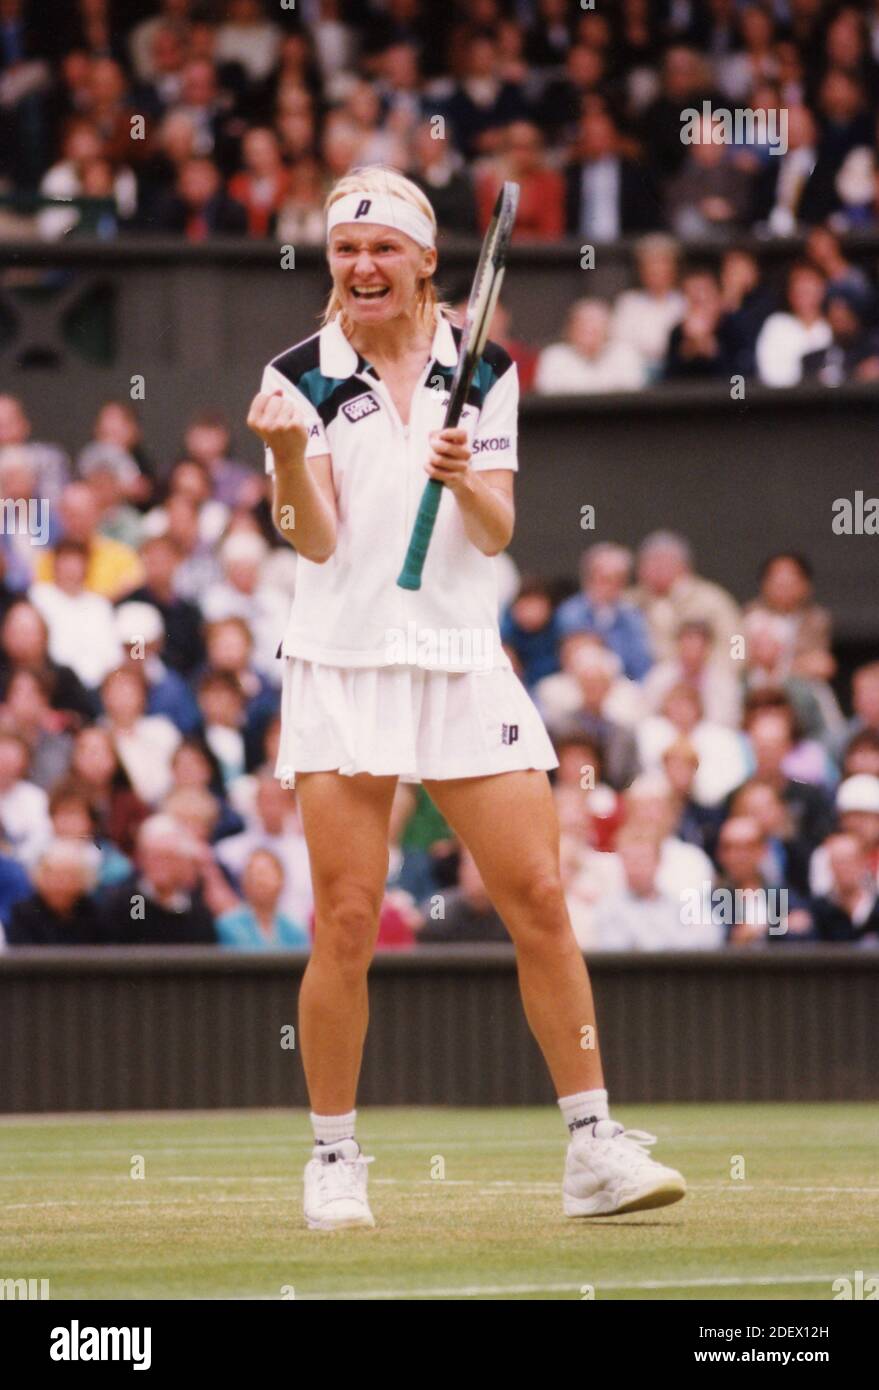 Czech tennis player Jana Novotna, Wimbledon, UK 1998 Stock Photo - Alamy